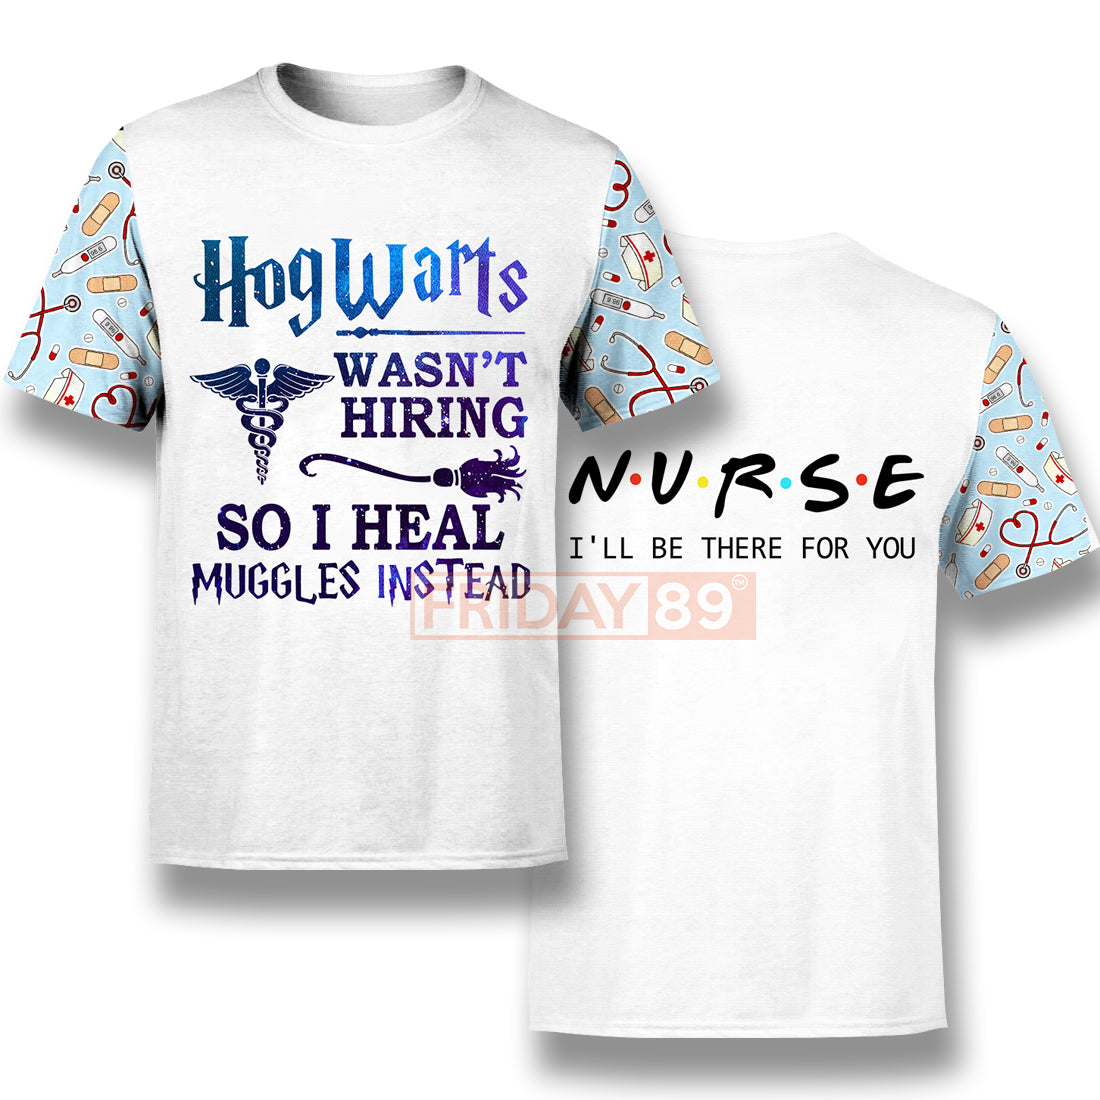 Unifinz HP Nurse T-shirt HW Wasn't Hiring So I Heal Muggles Instead 3D Print T-shirt Awesome HP Nurse Hoodie Sweater Tank 2025